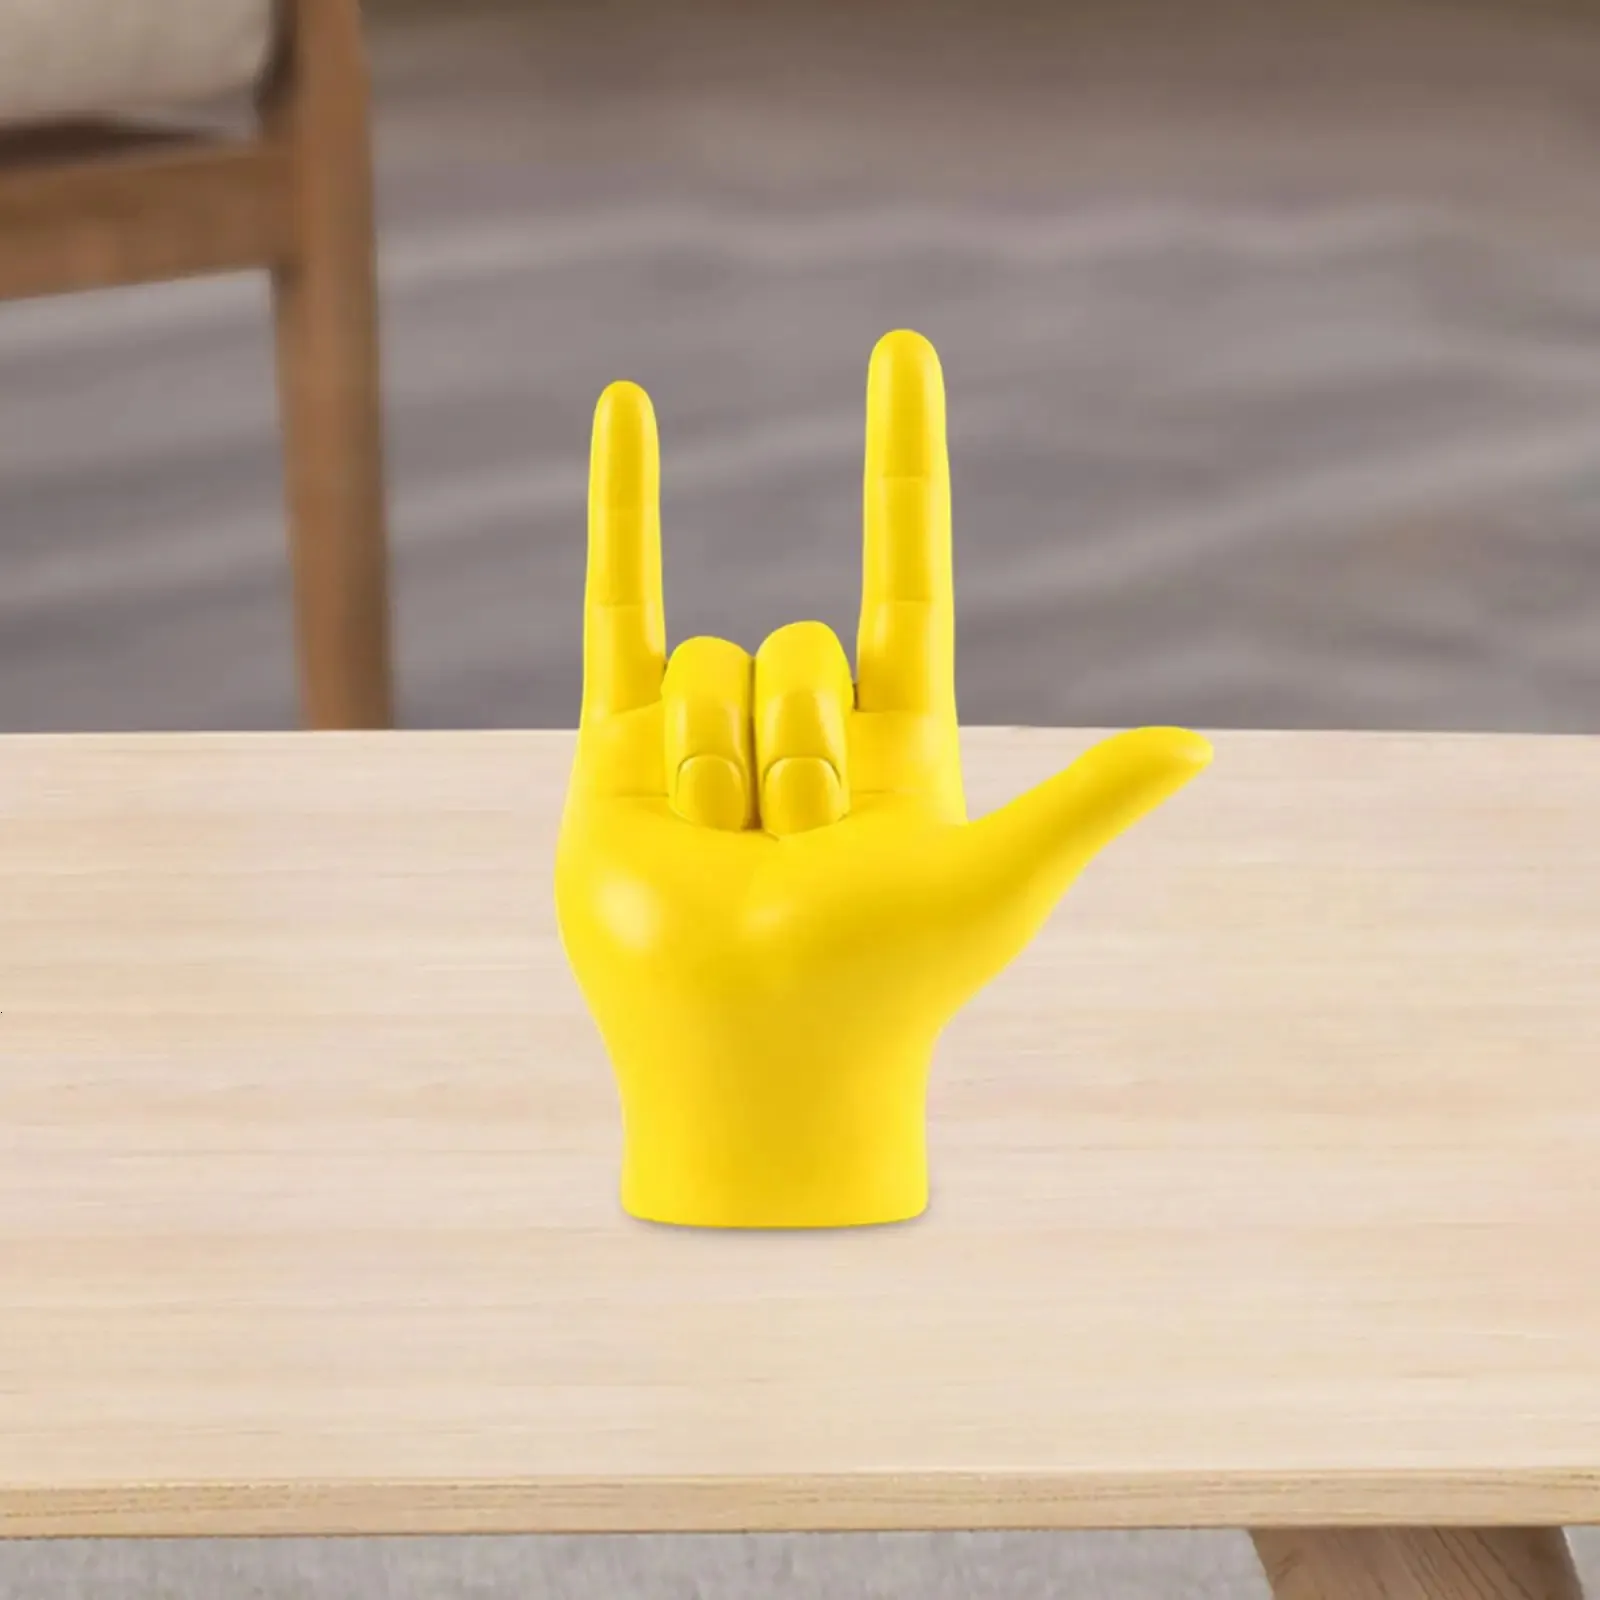 Love You Finger Gesture Statue Figurine Rock On Hand Sculpture Music Gesture Figure for Bedroom Desktop Home Decoration